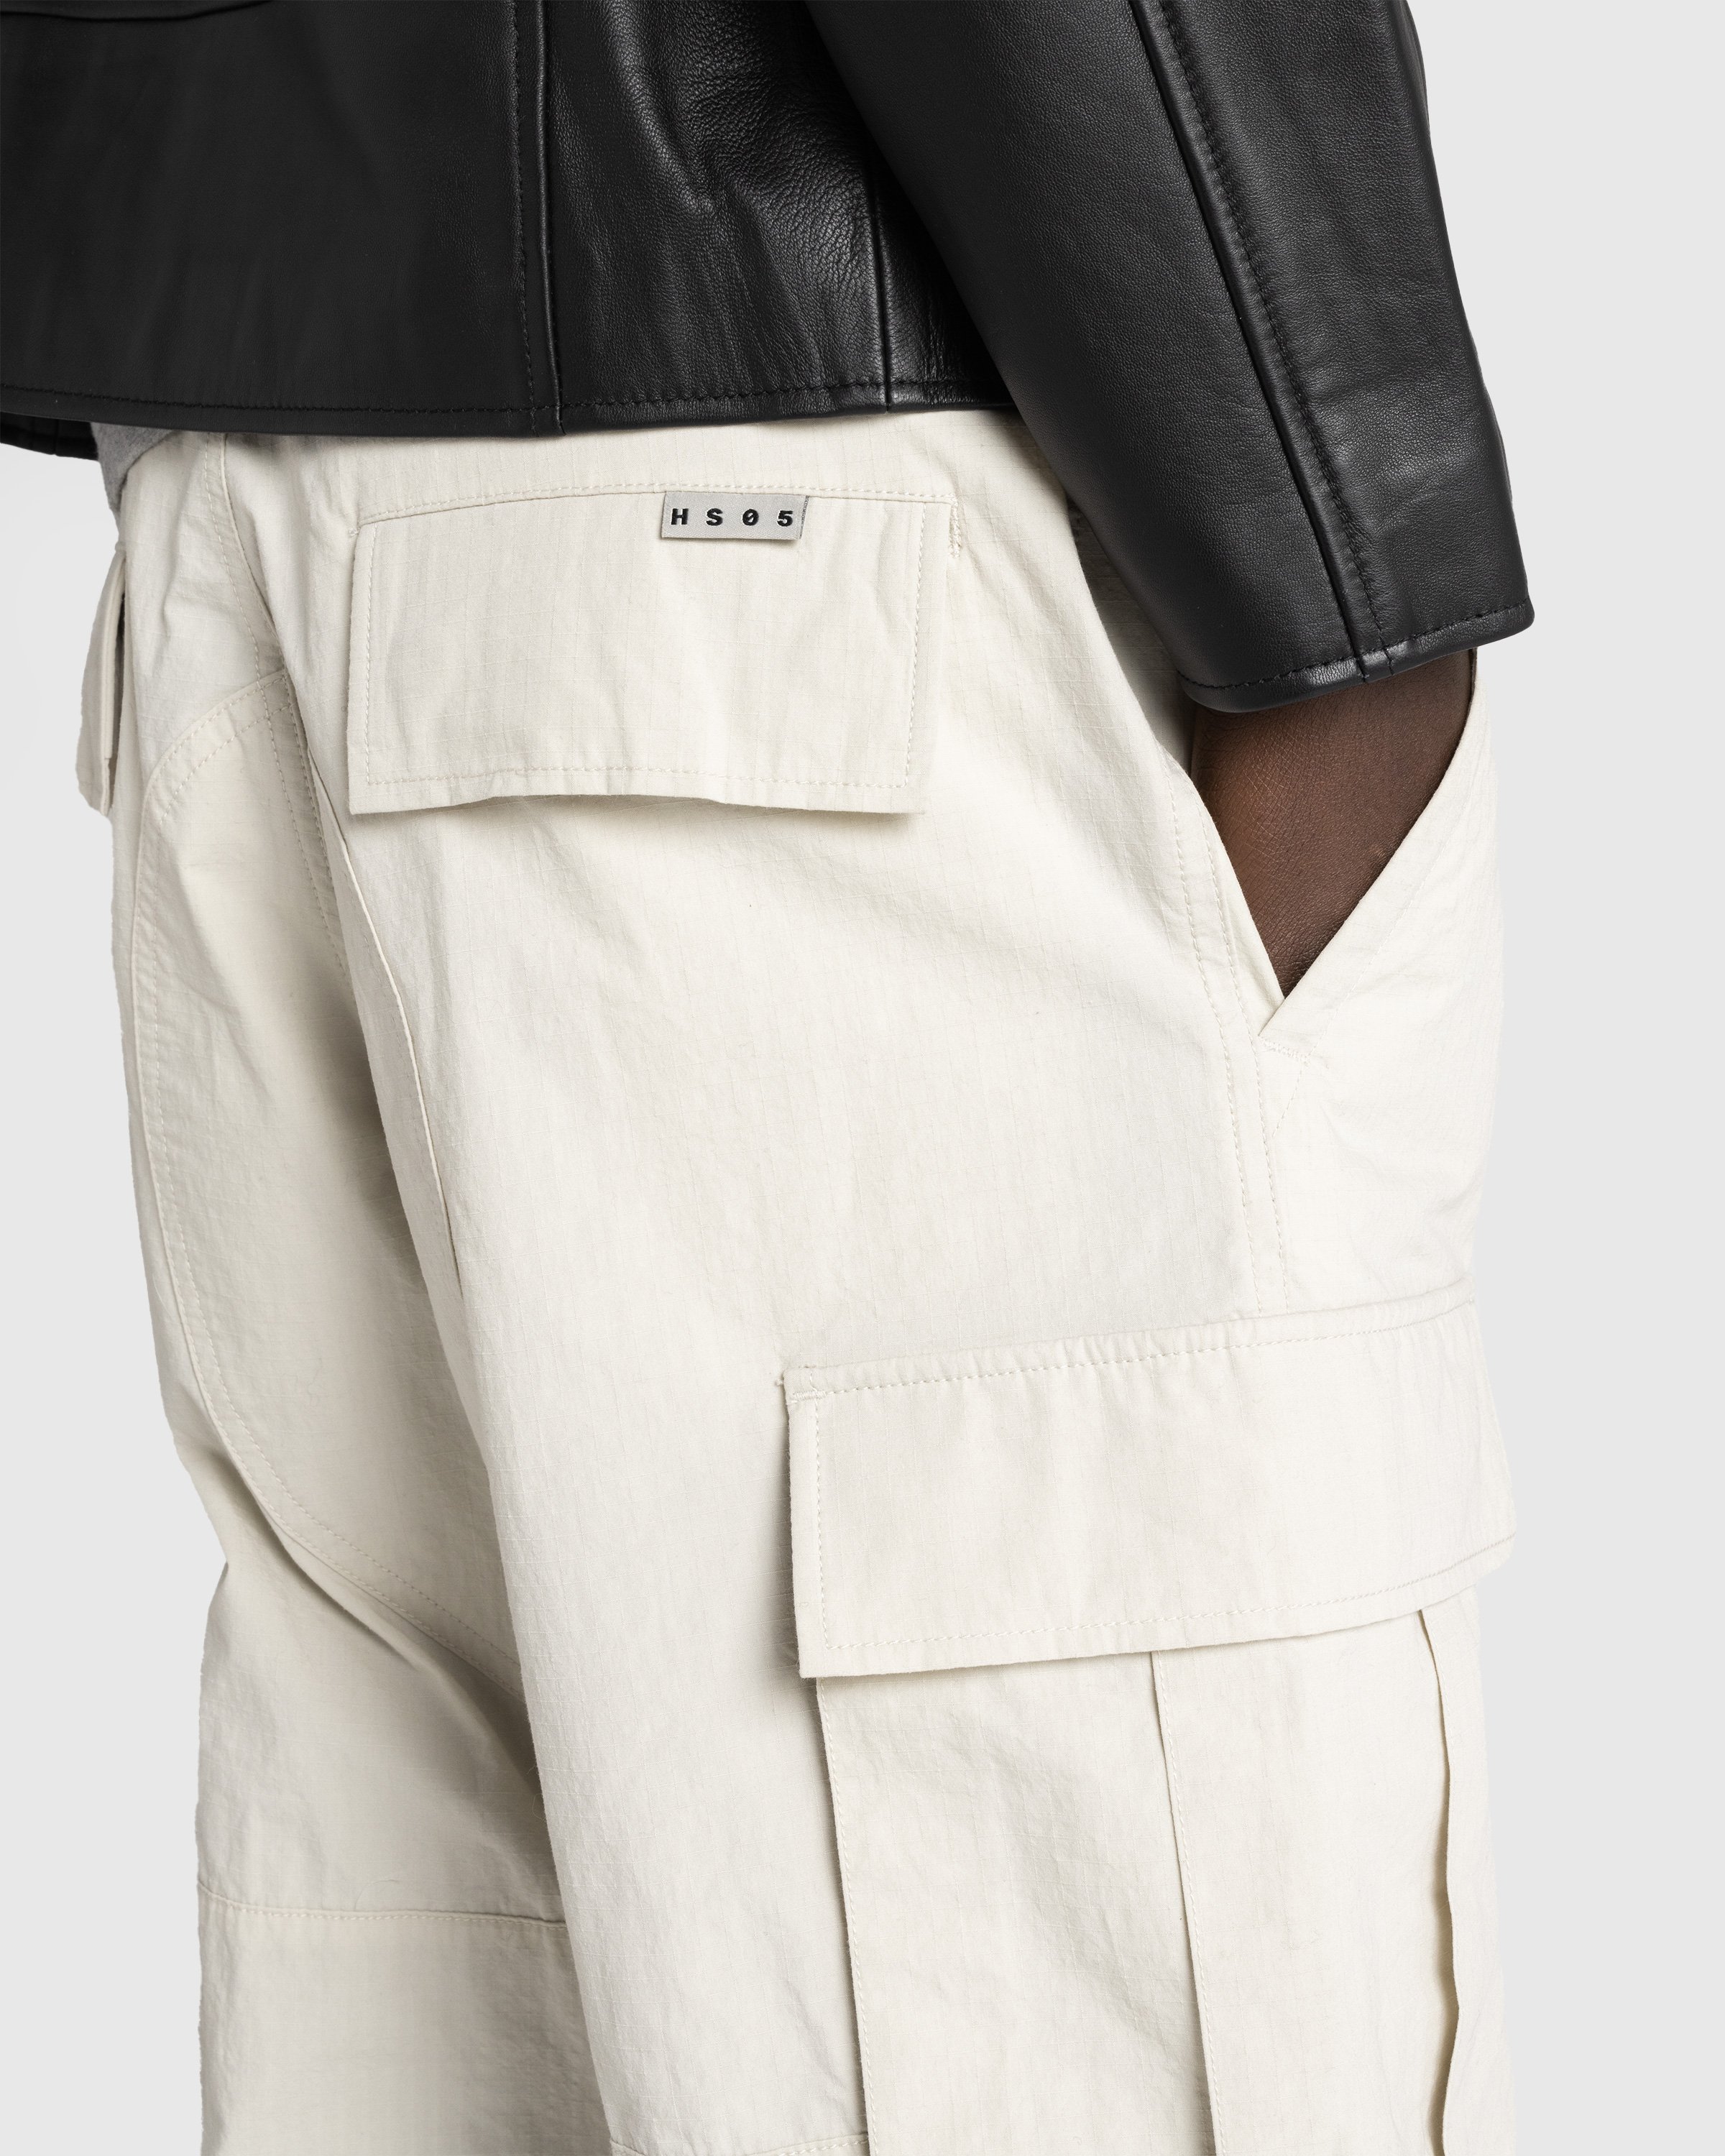 Highsnobiety HS05 - Nylon Cotton Cargo Pants - Clothing - Off White - Image 7